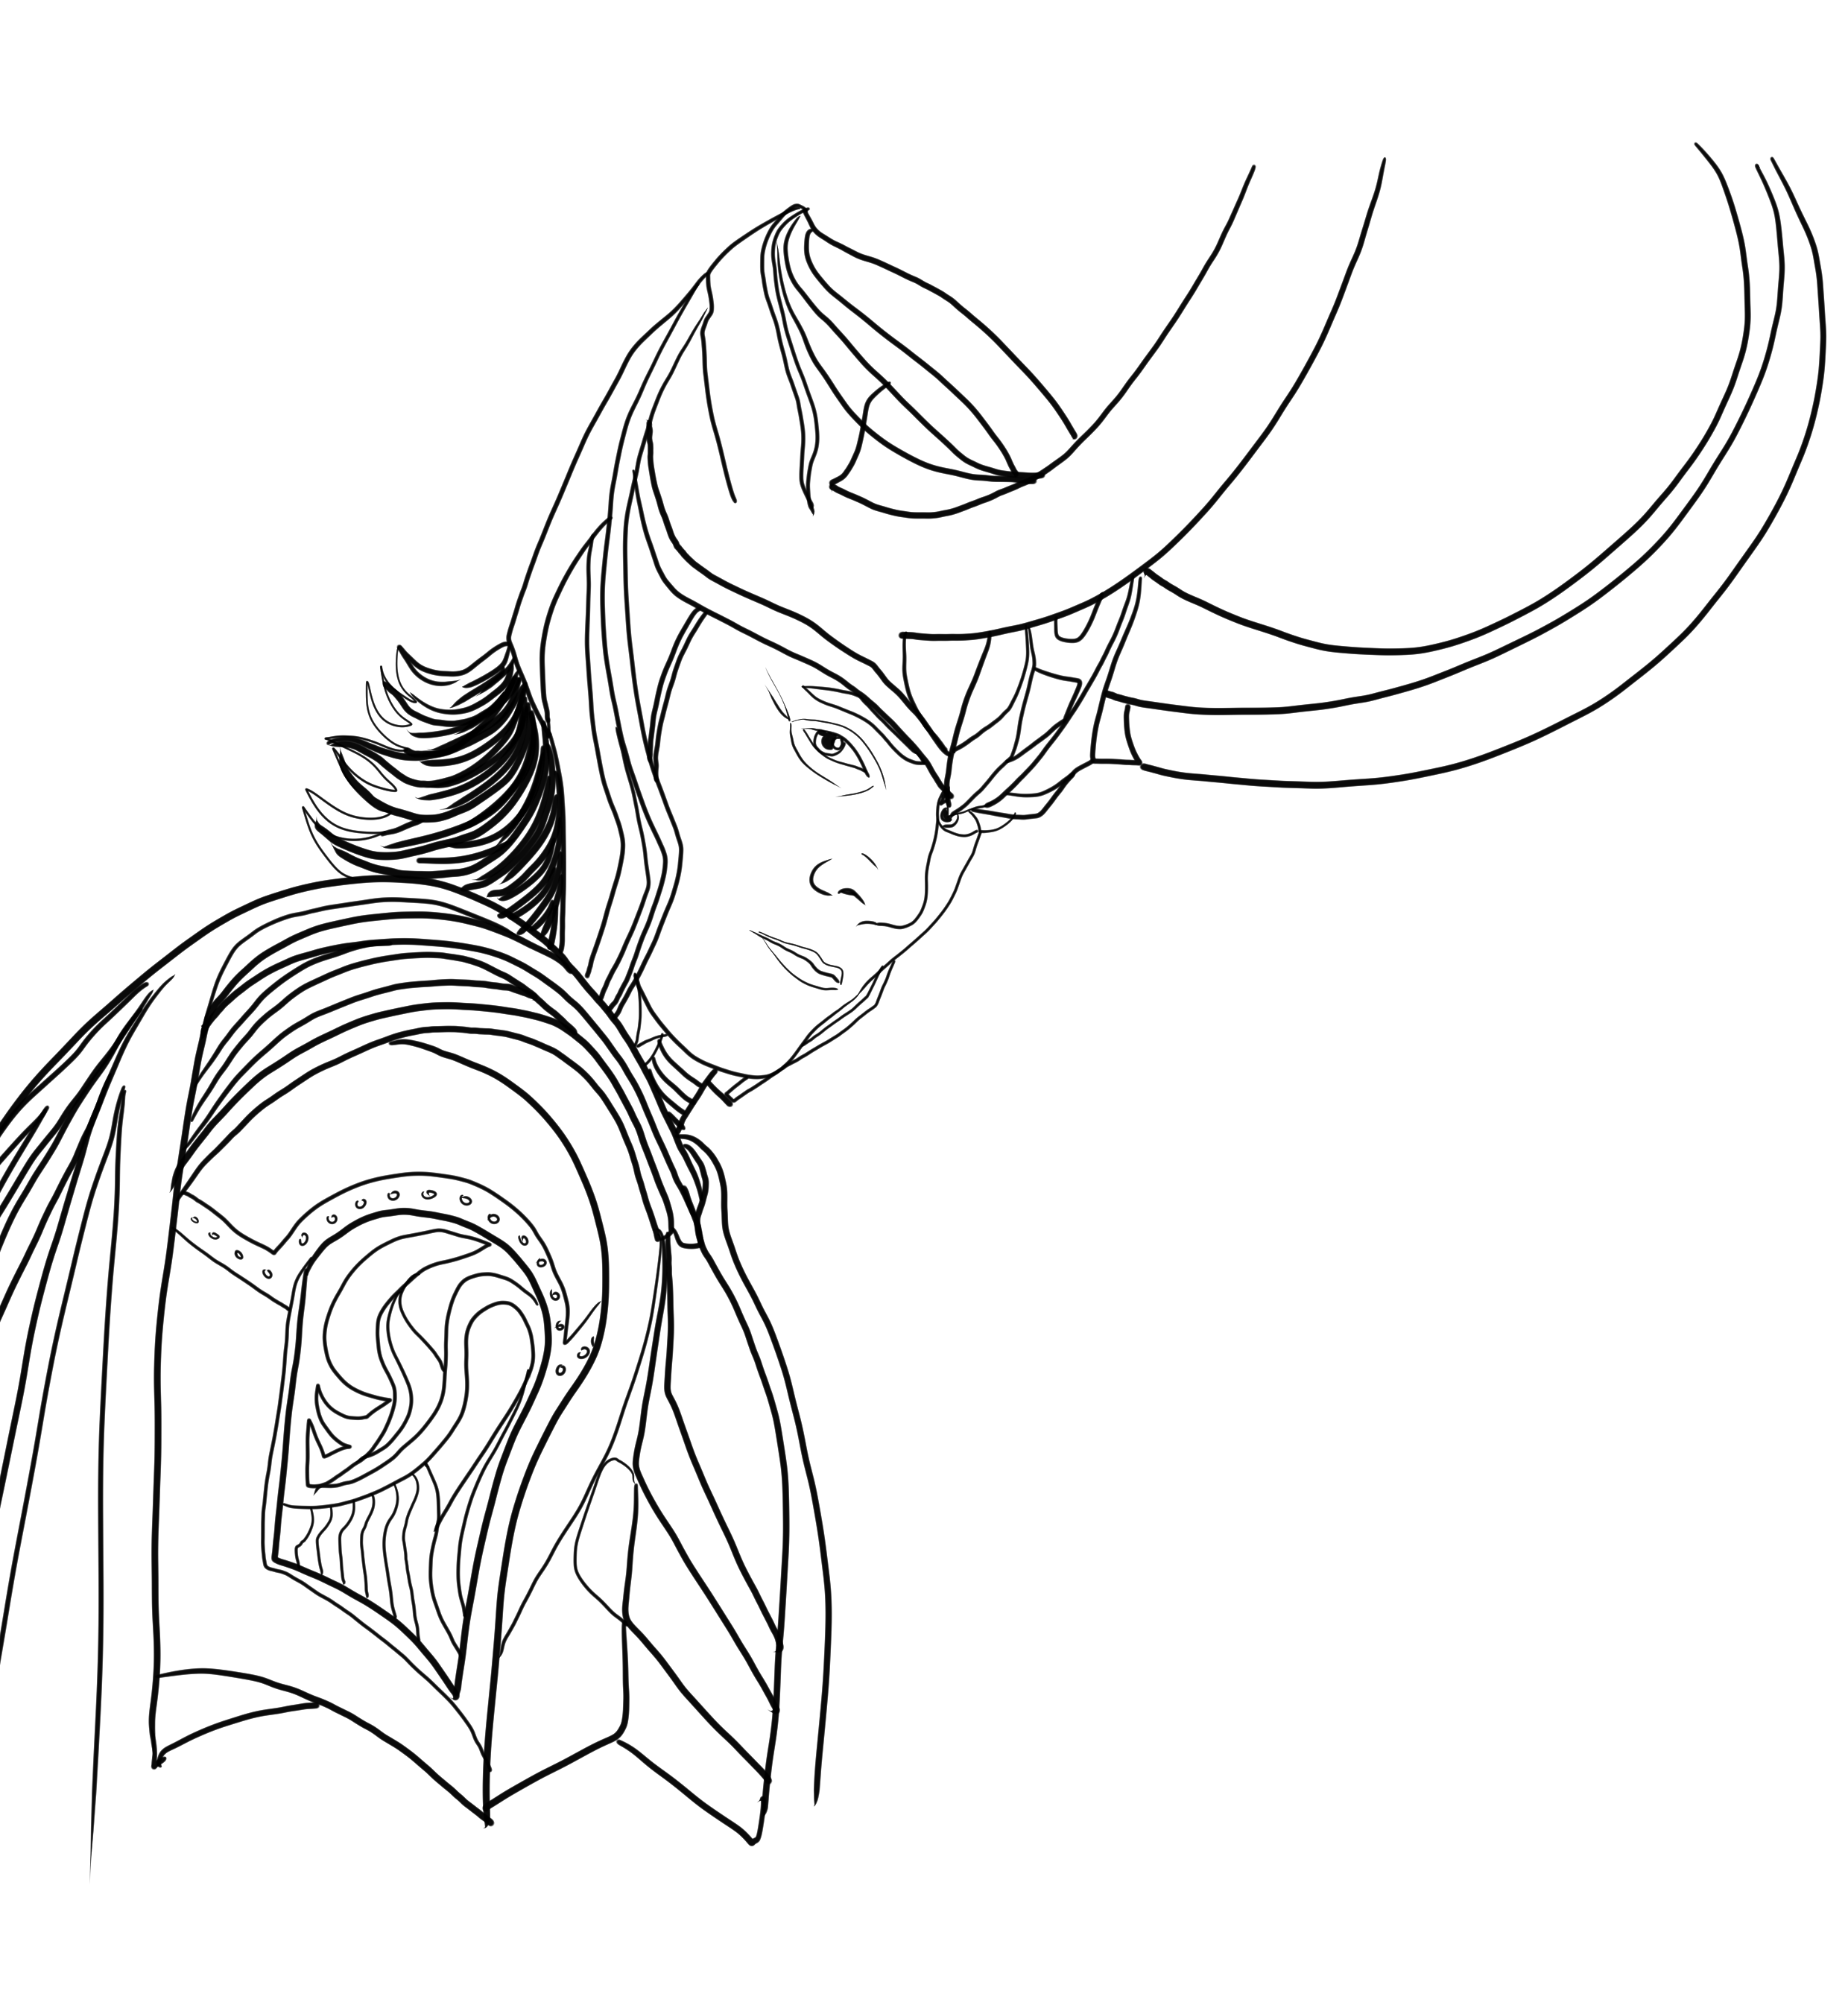 Loki 04 Loki coloring page to print and coloring